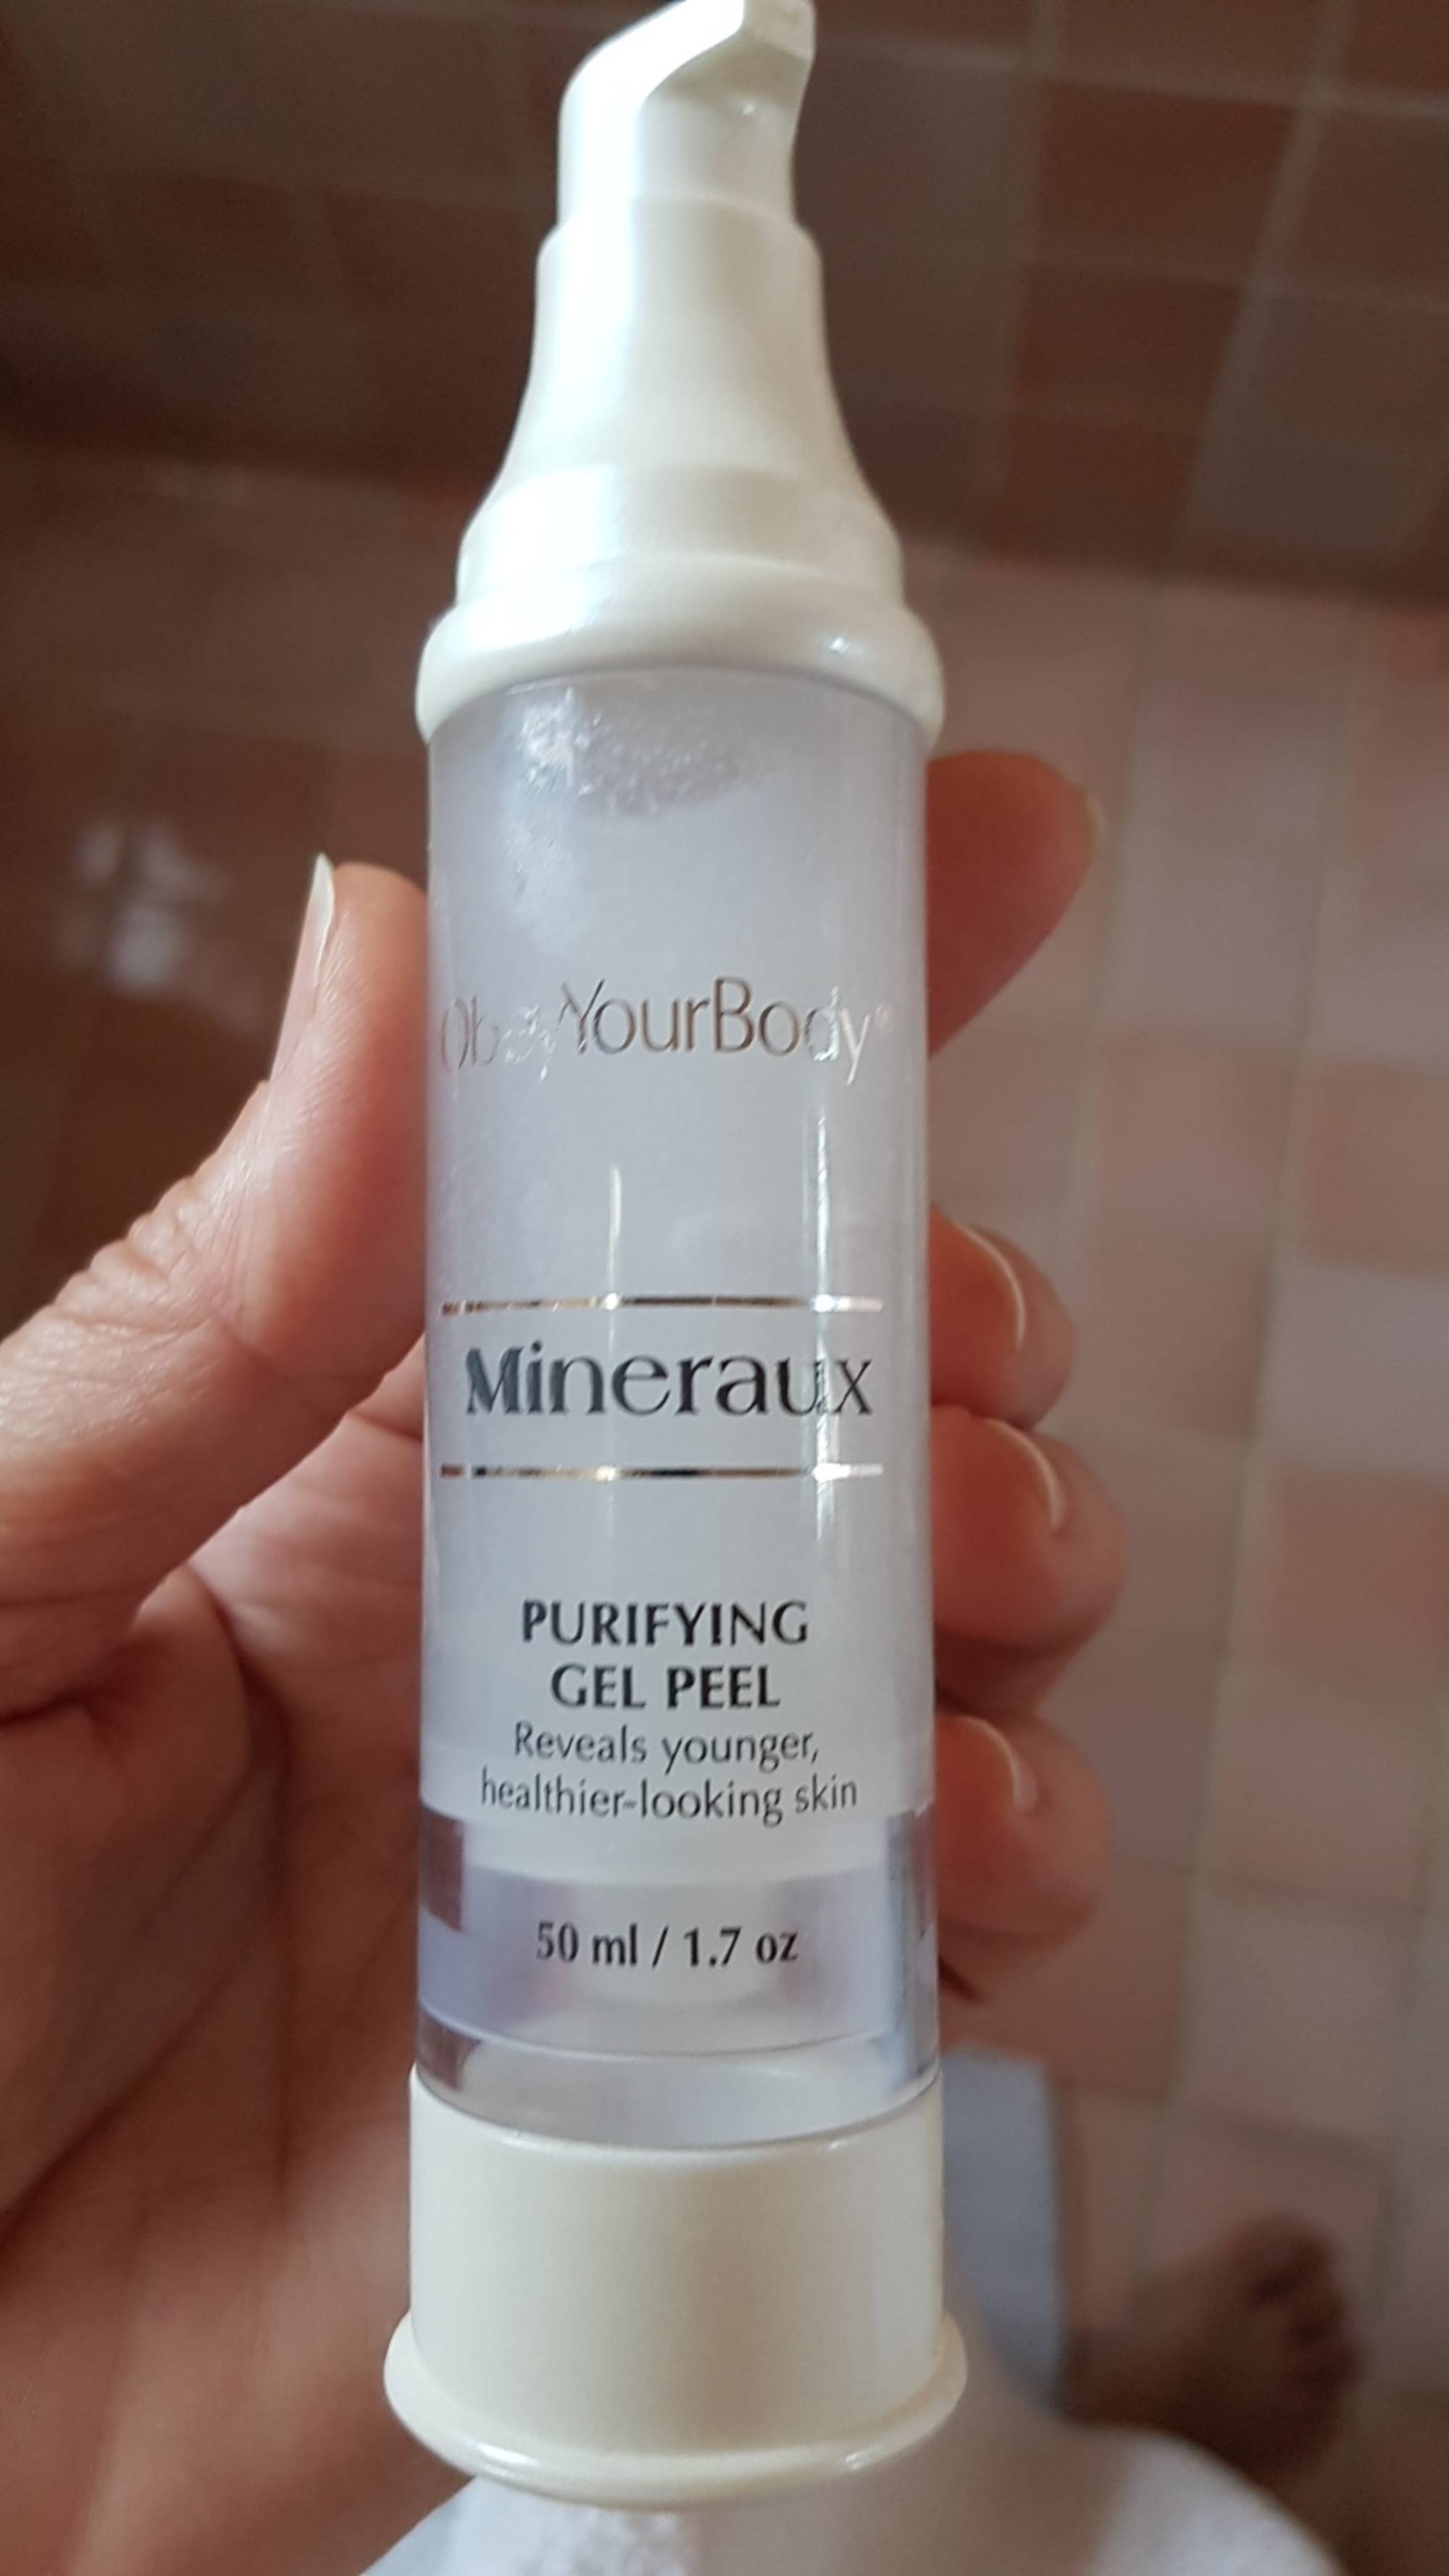 OBEY YOUR BODY - Mineraux - Purifying gel peel